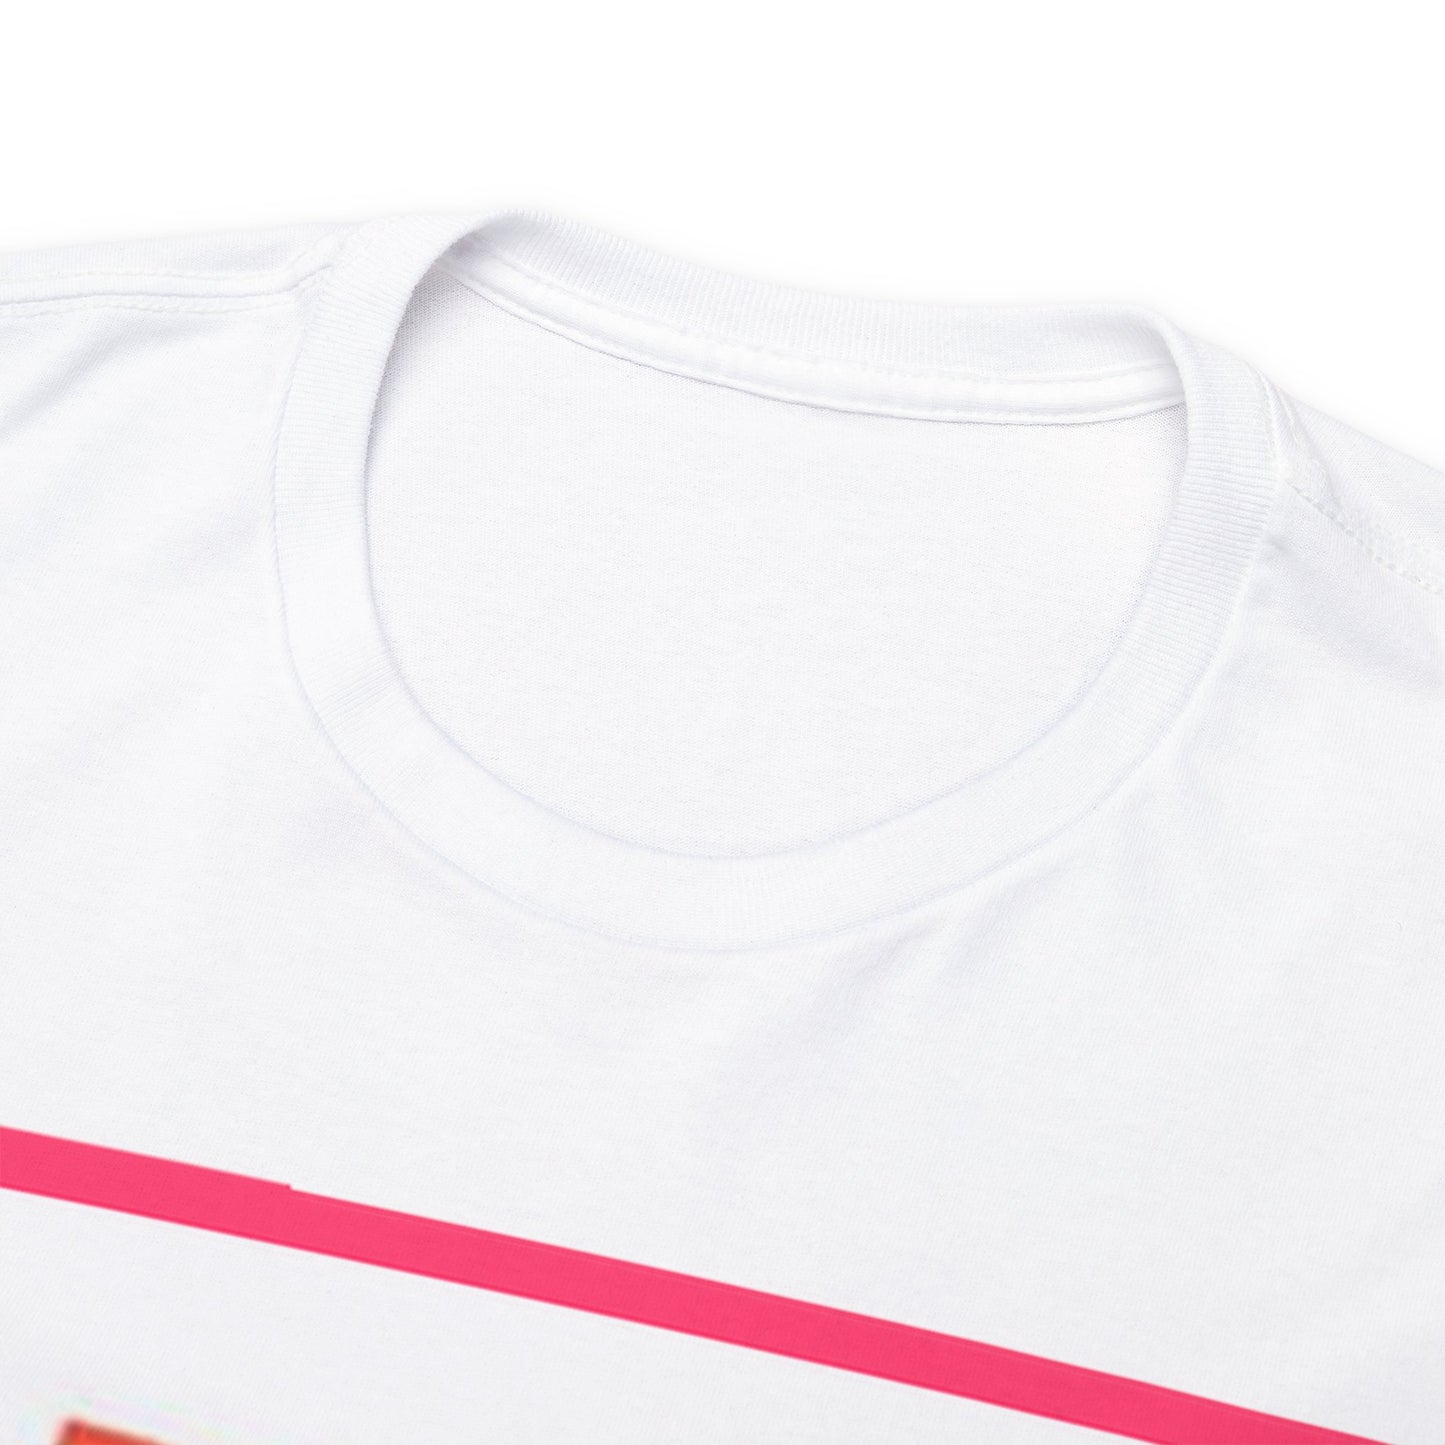 Teach  White Logo Front Back T-Shirt 10 colors  S-5x